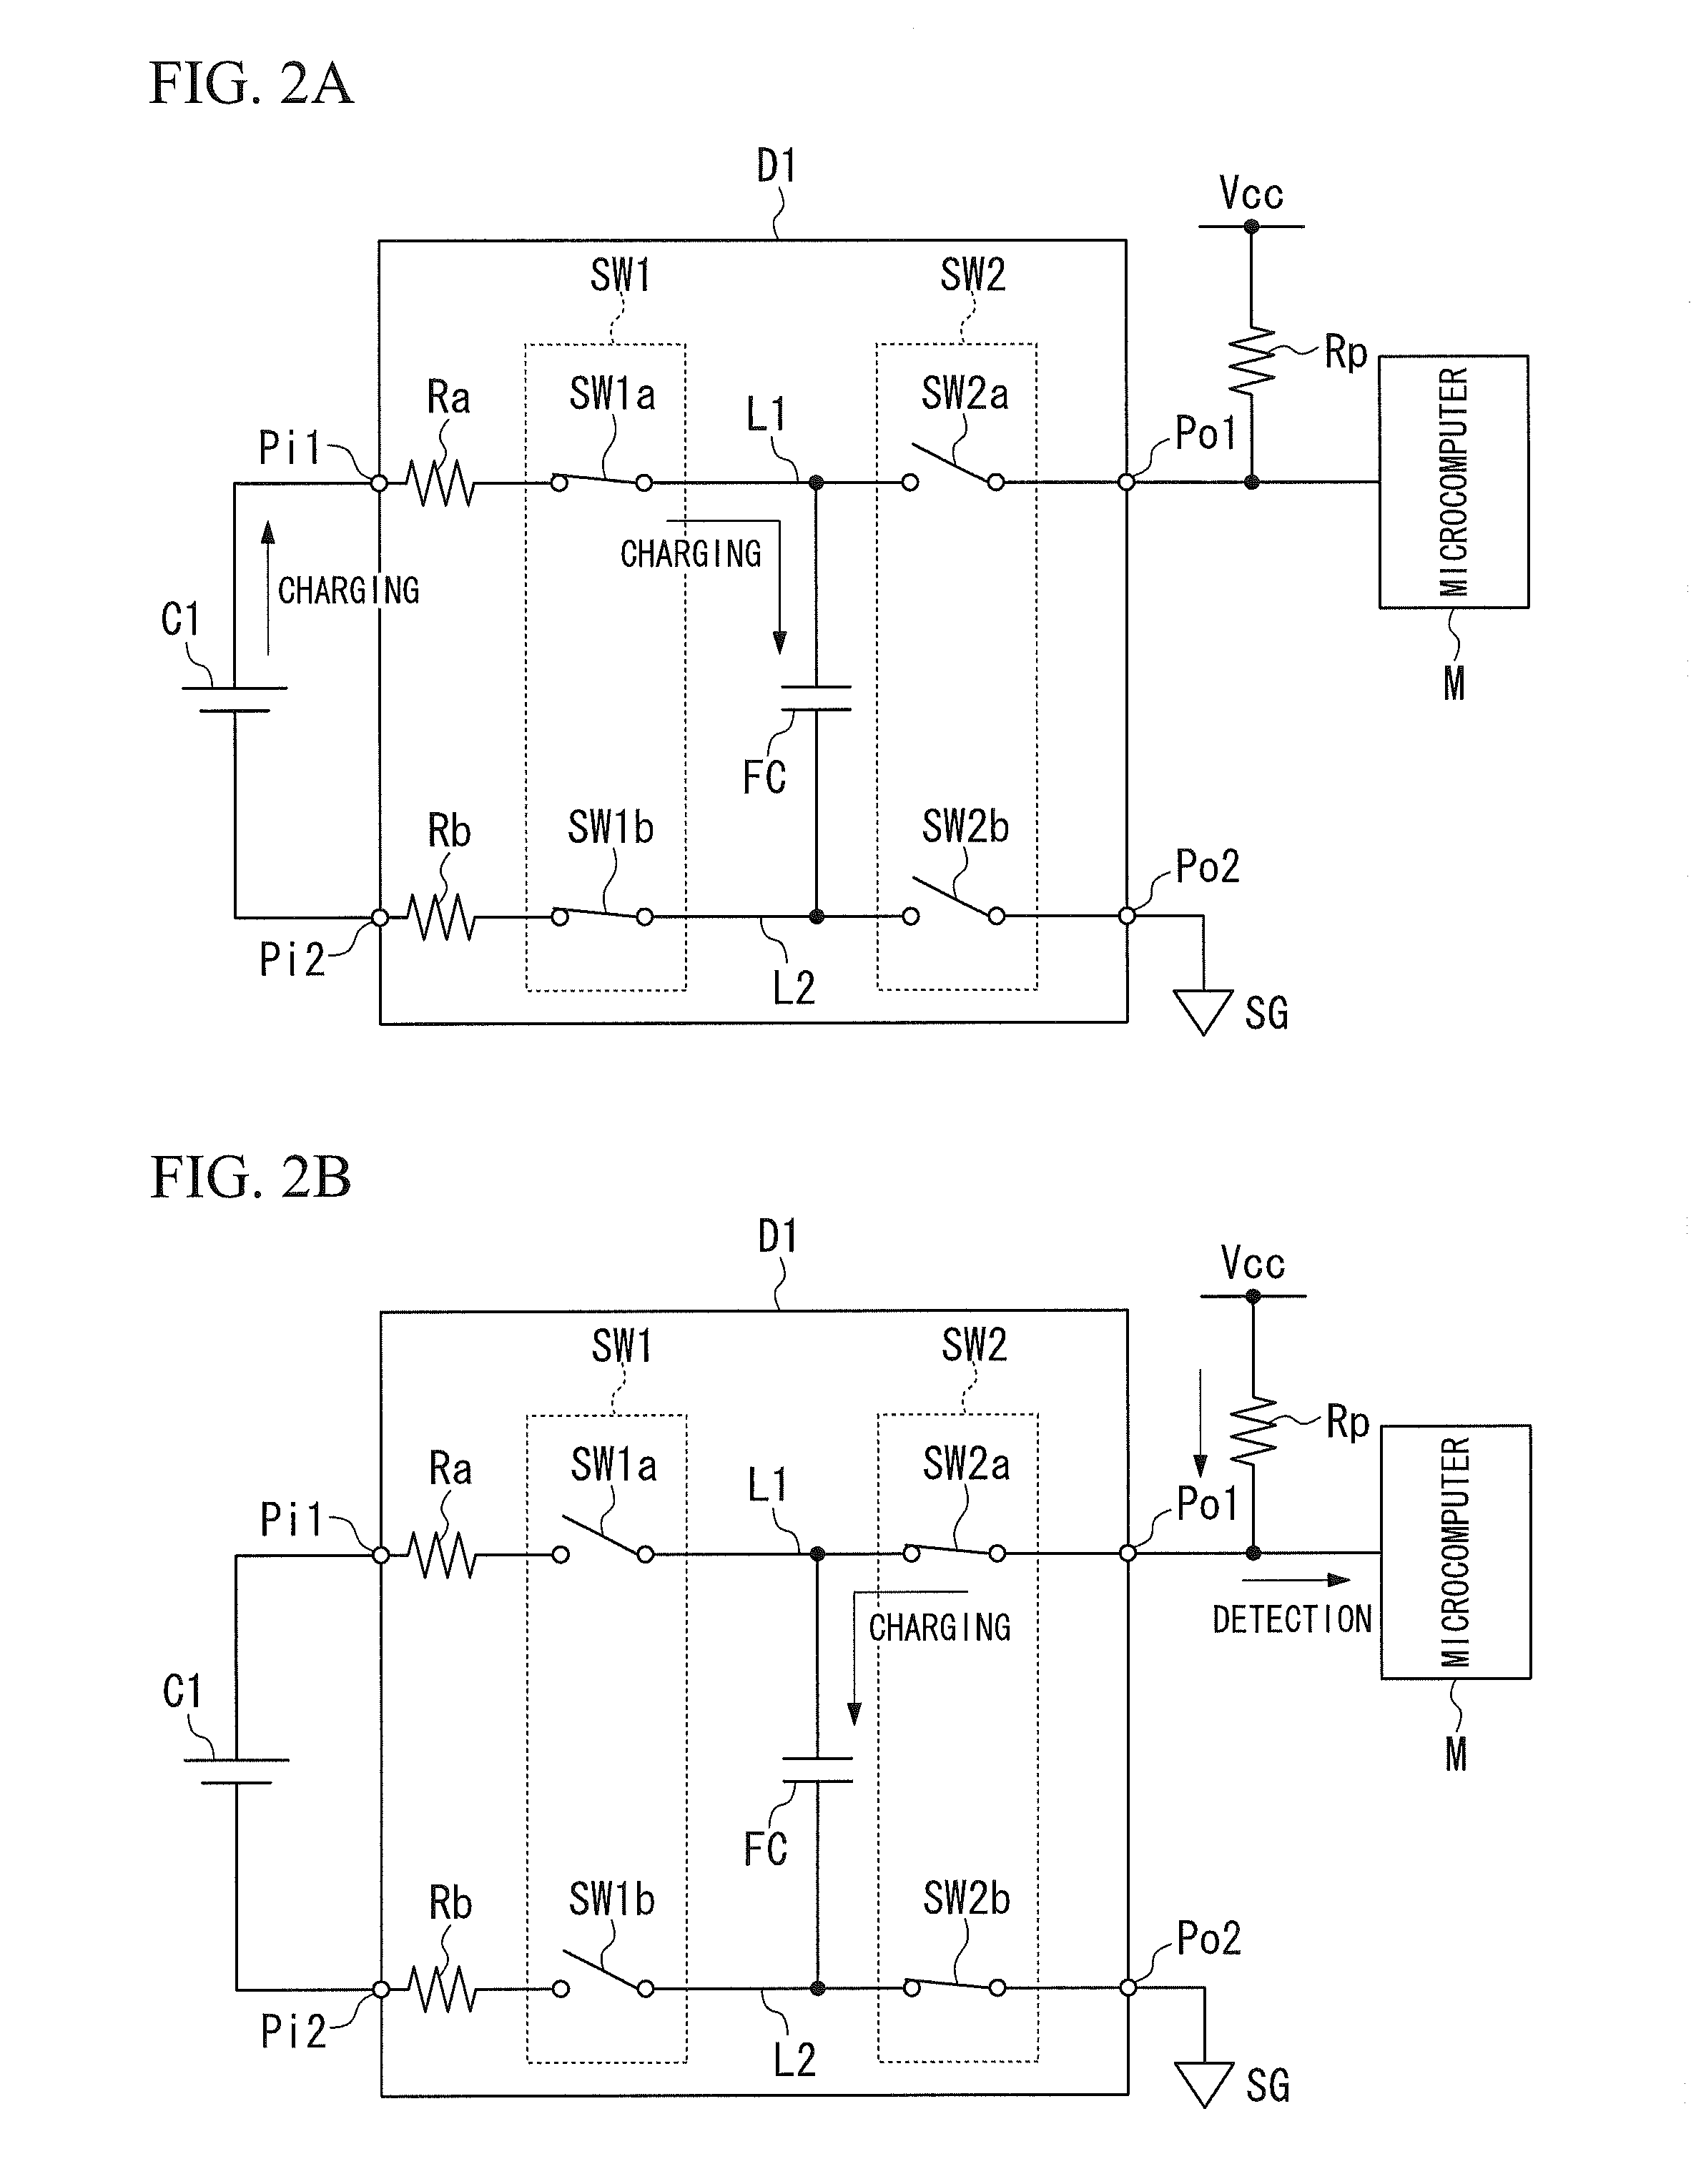 Battery voltage detector having pull-up resistor